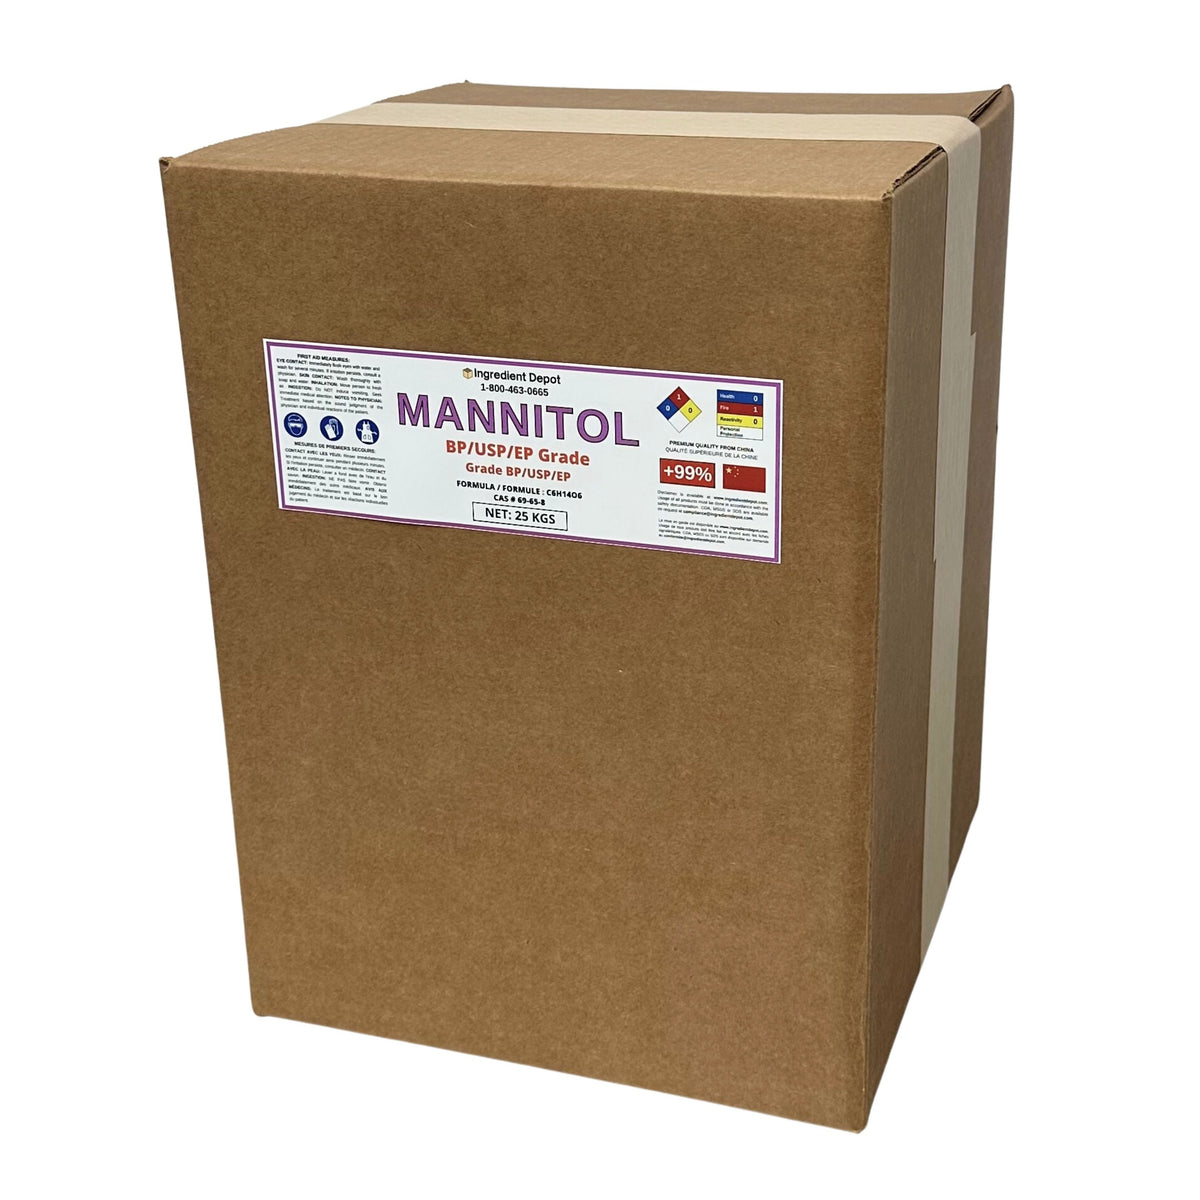 Mannitol BP/USP/EP Grade 25 kgs